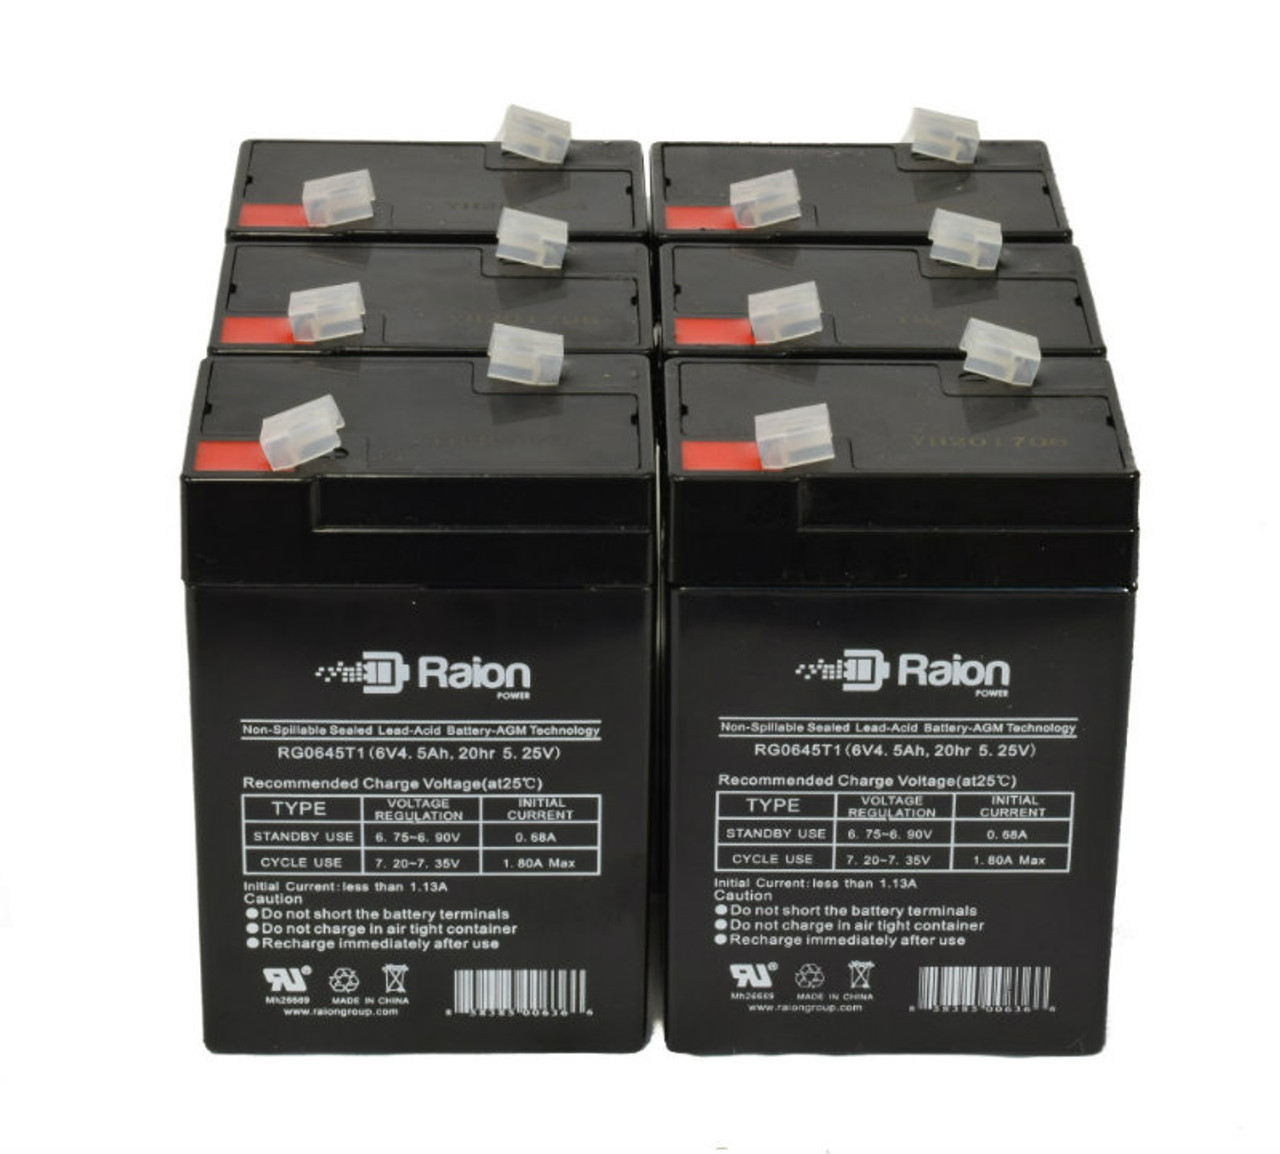 Raion Power 6 Volt 4.5Ah RG0645T1 Replacement Battery for SunStone Power SPT6-4.5 - 6 Pack